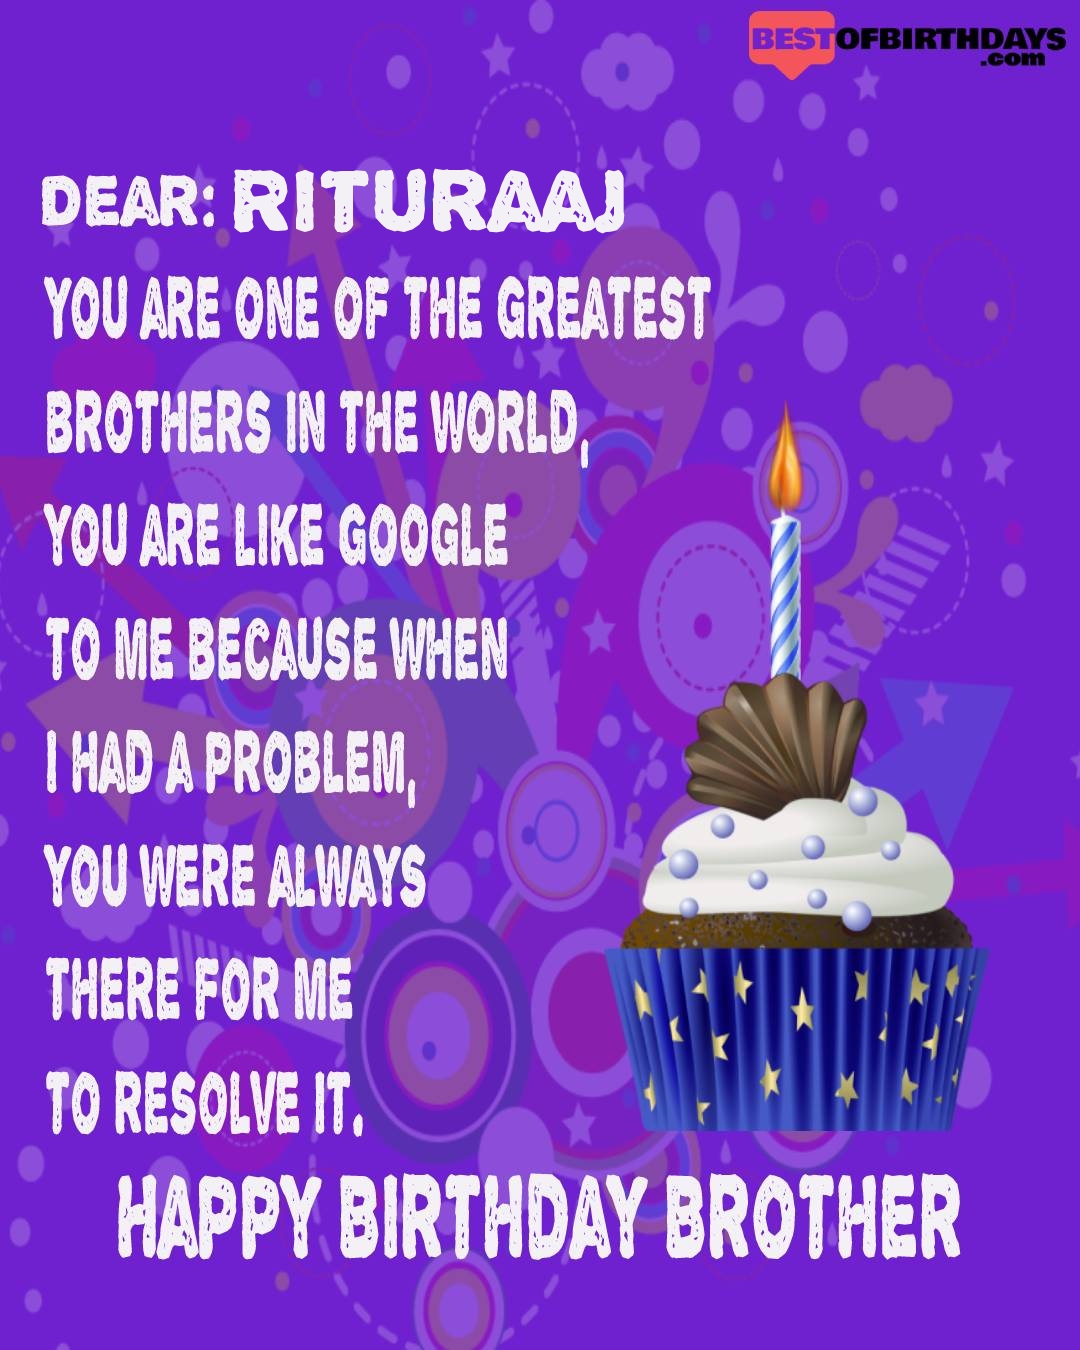 Happy birthday rituraaj bhai brother bro